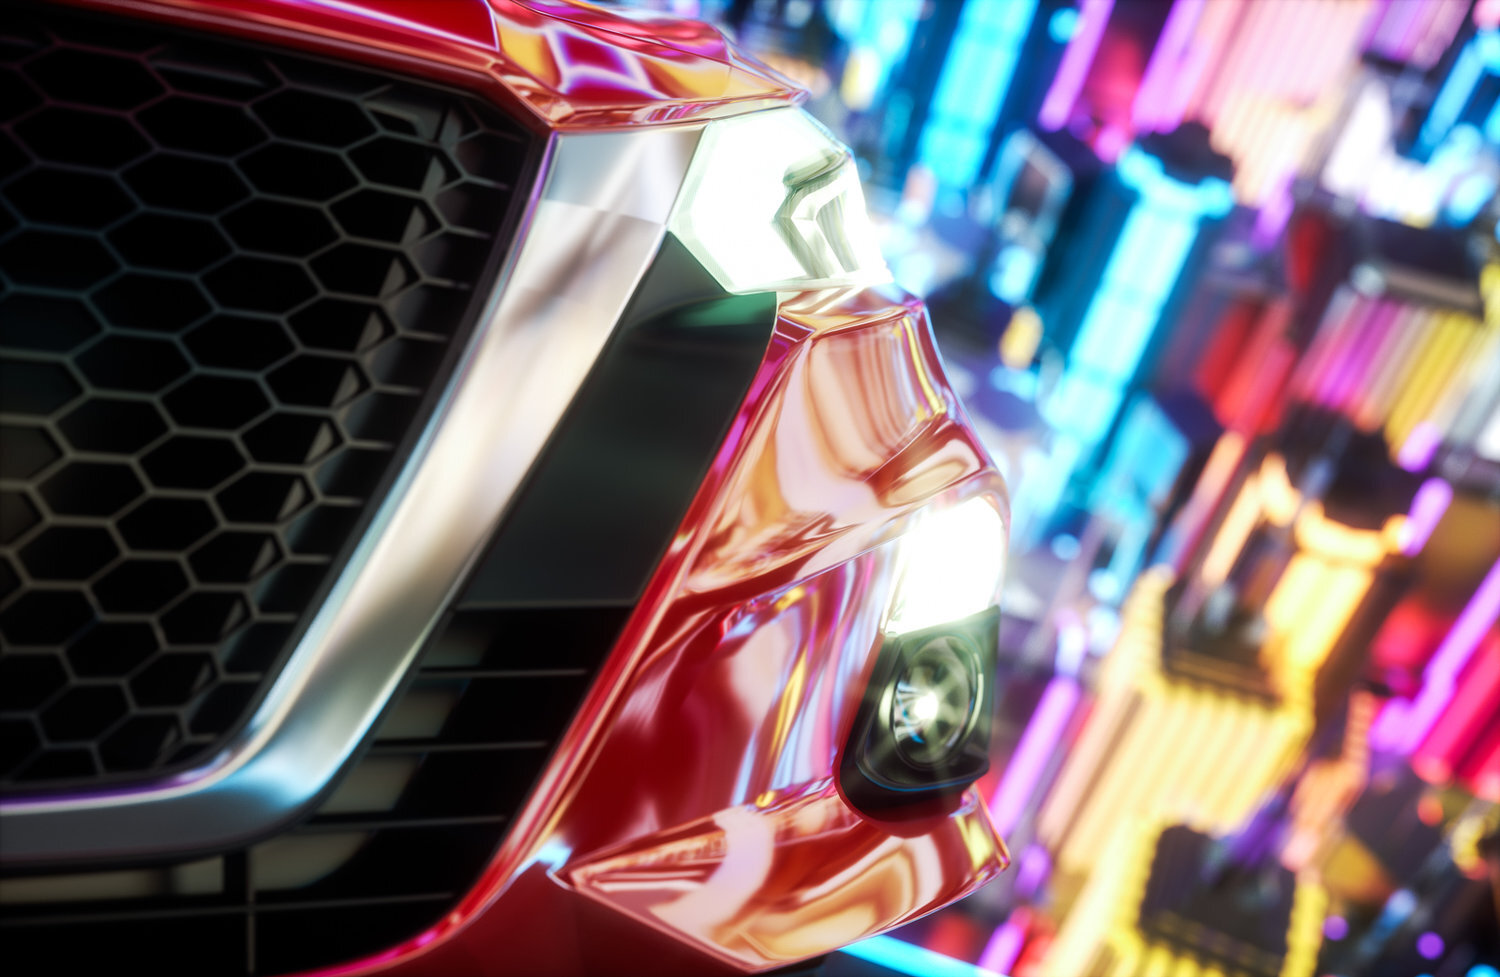 Nissan_2019Altima_EscapeTheGrind_Showcase-04.jpg